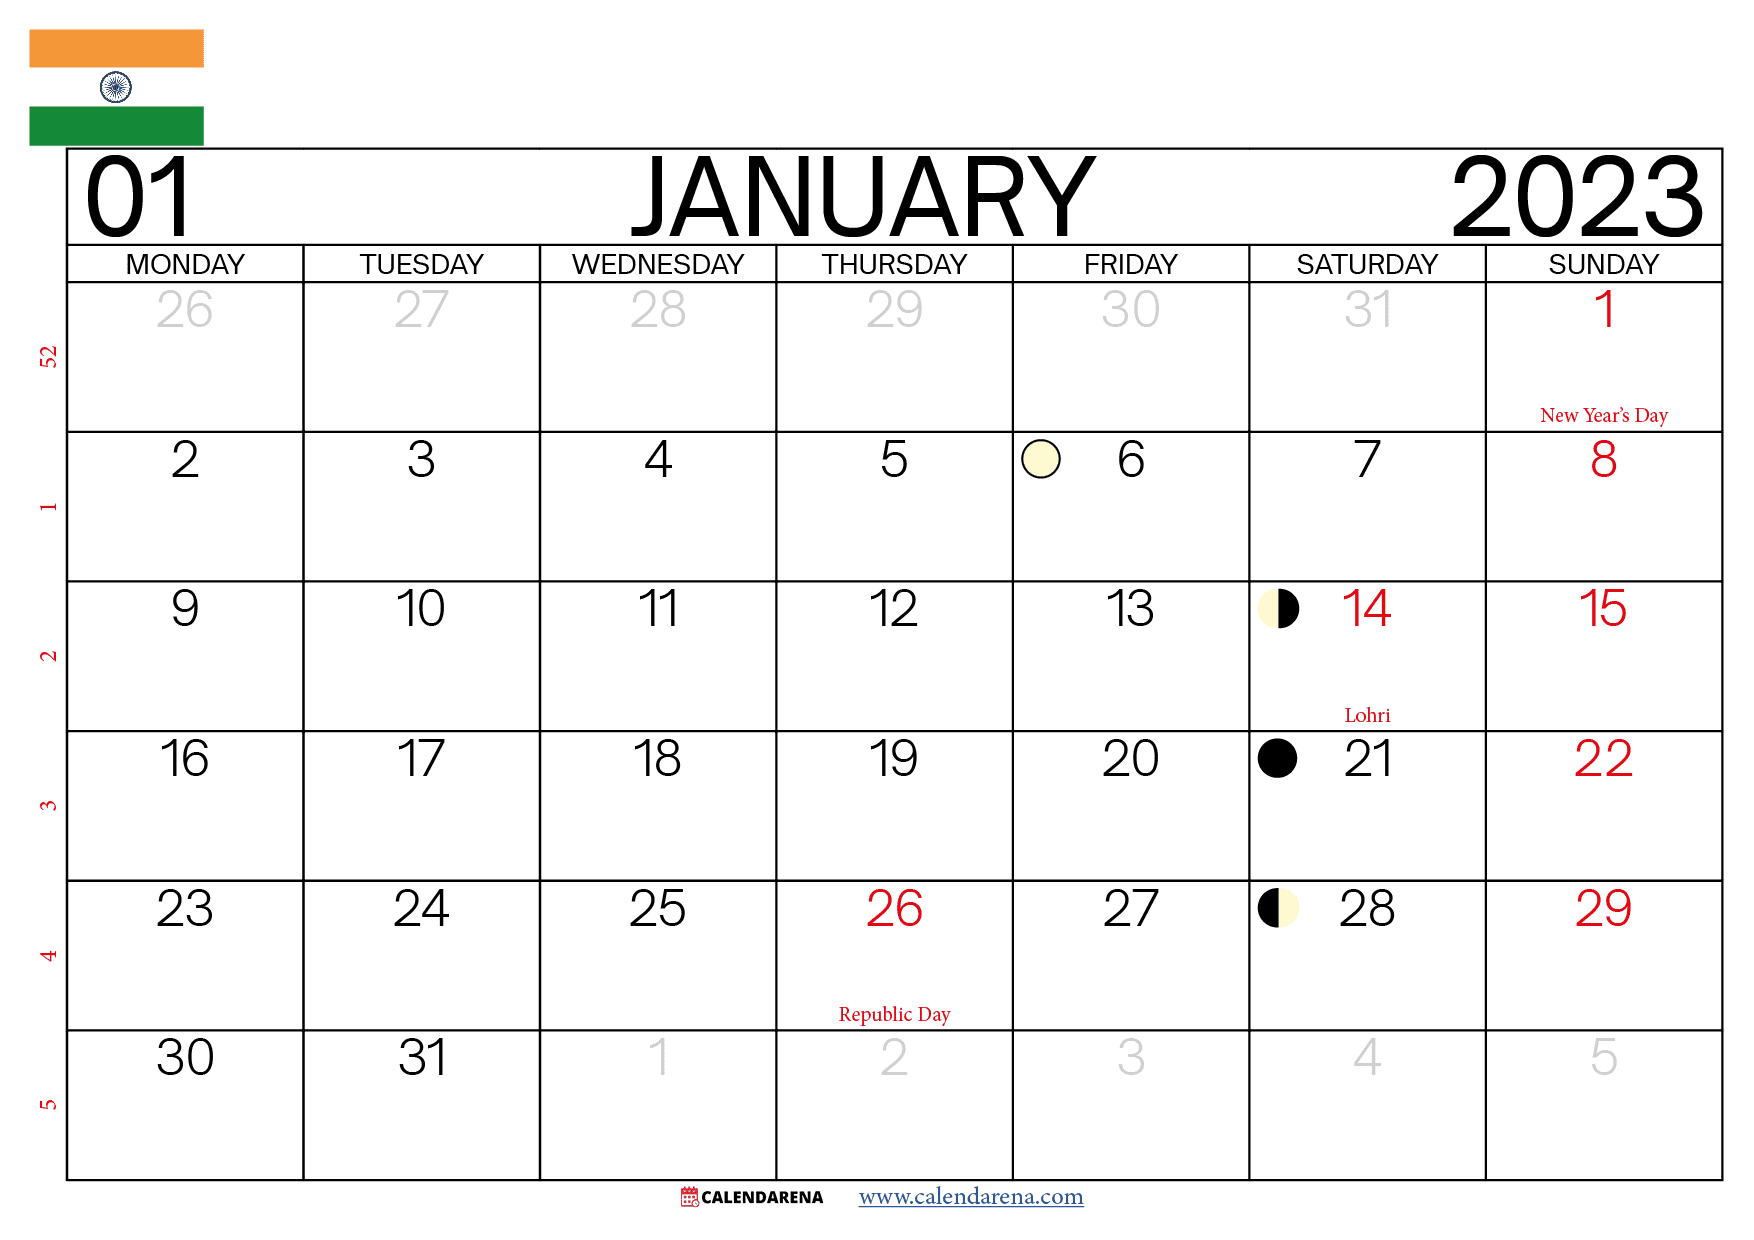 january-2023-calendar-with-holidays-india